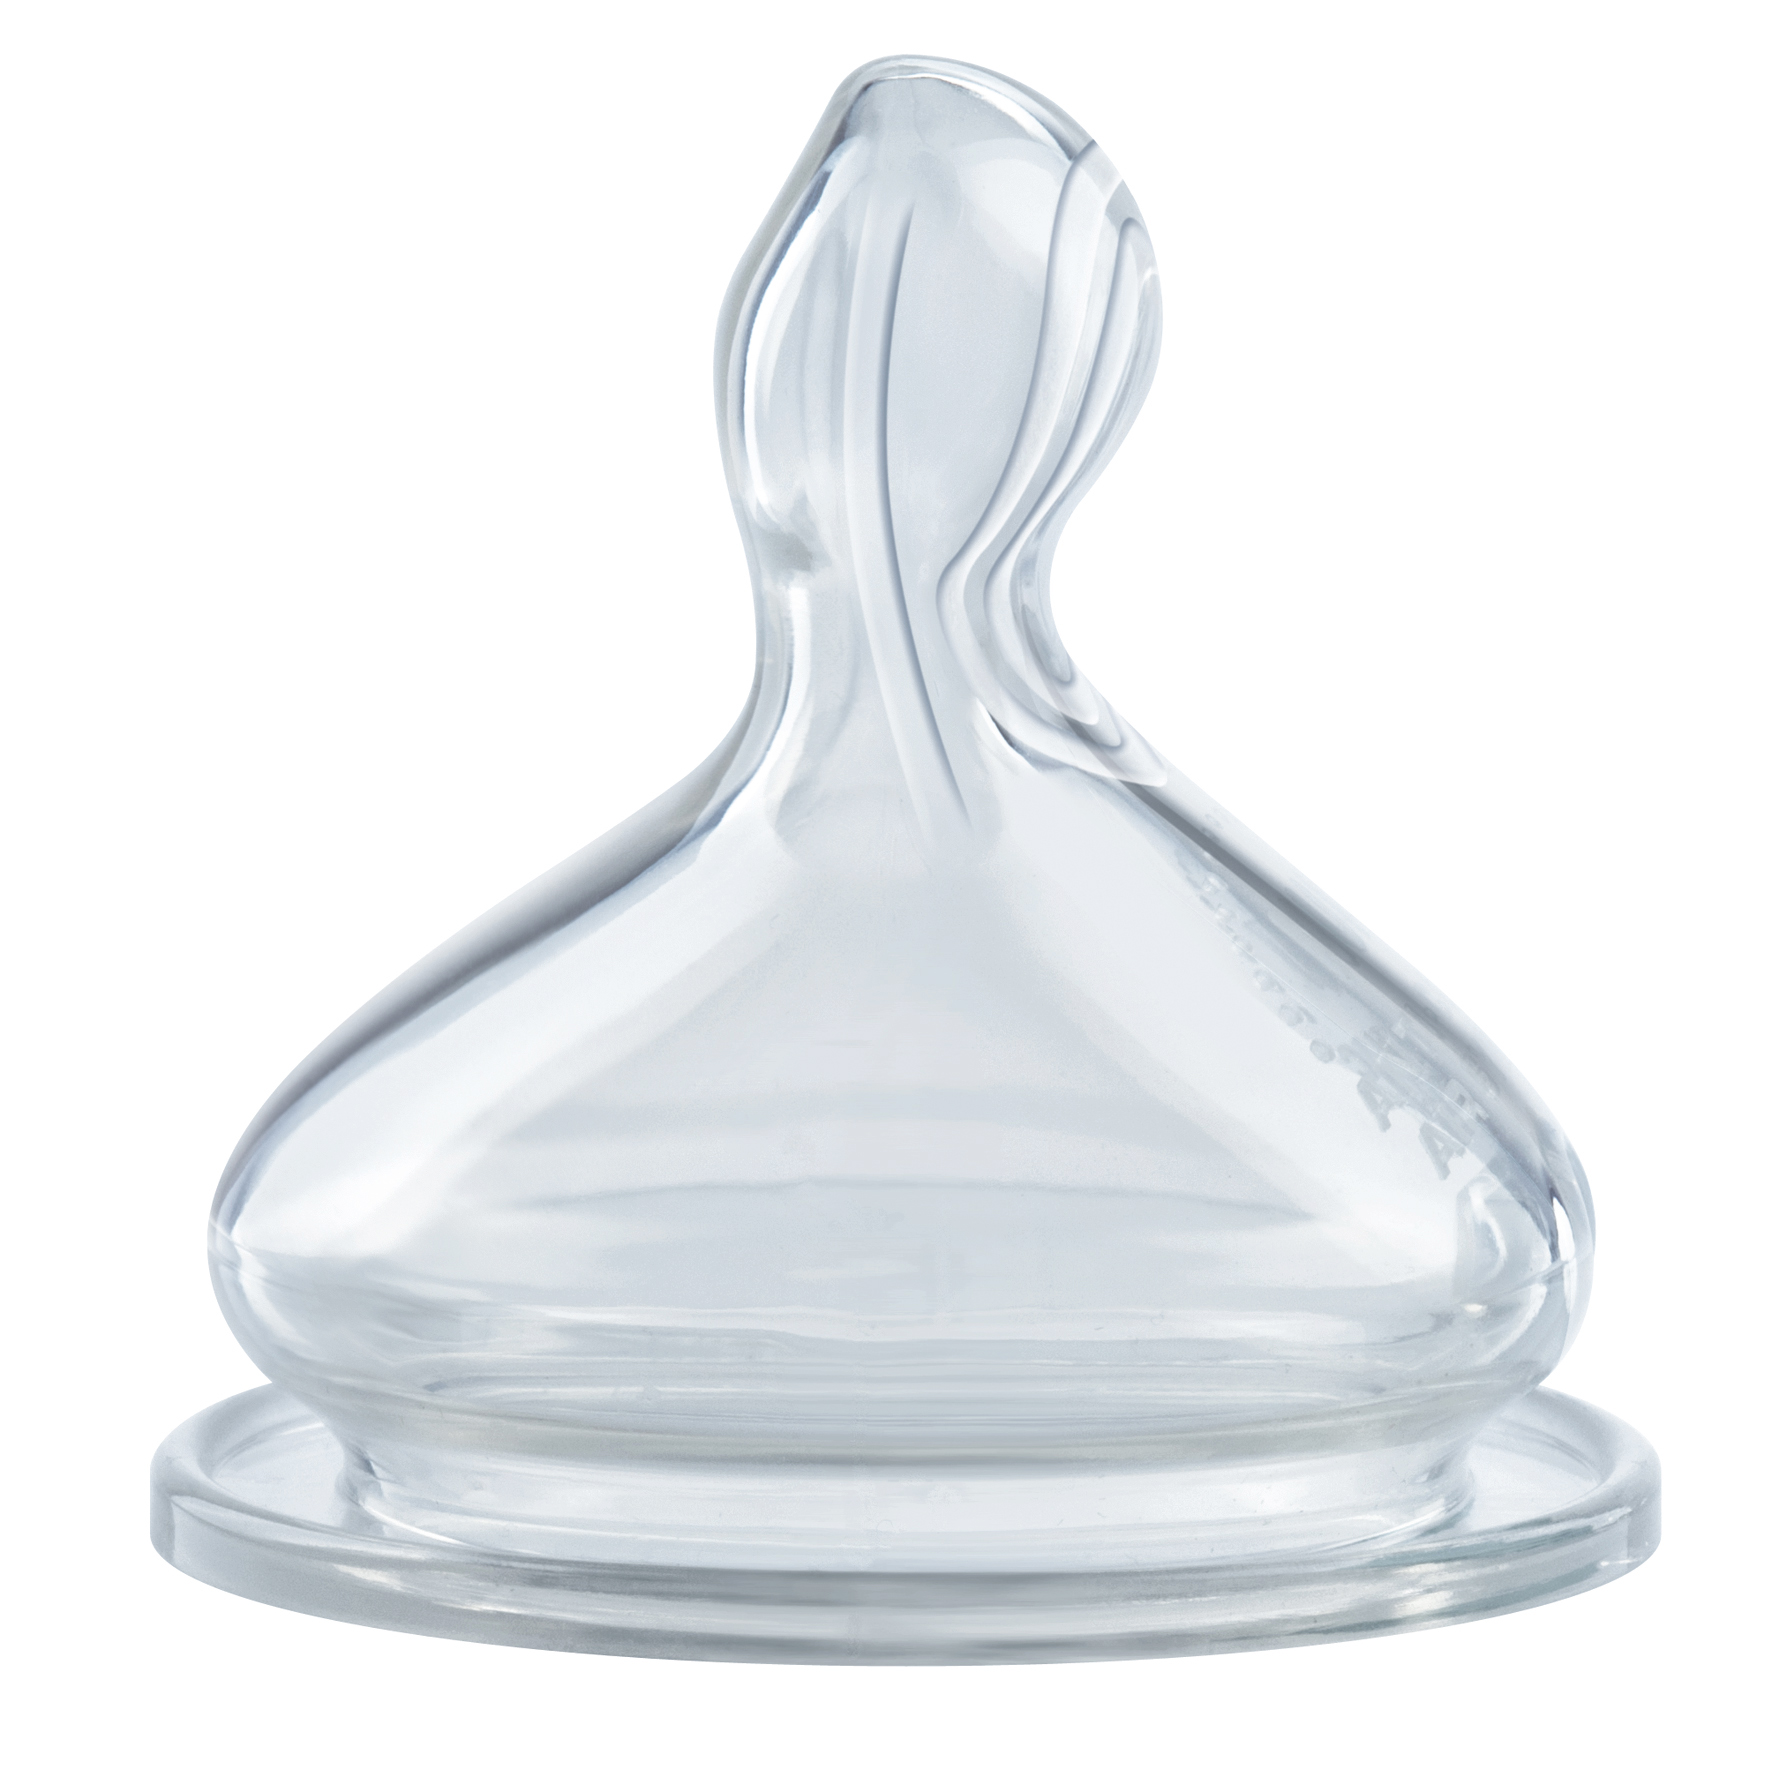 NUK® Smooth Flow Bottle Newborn Gift Set Product Image 10 of 10